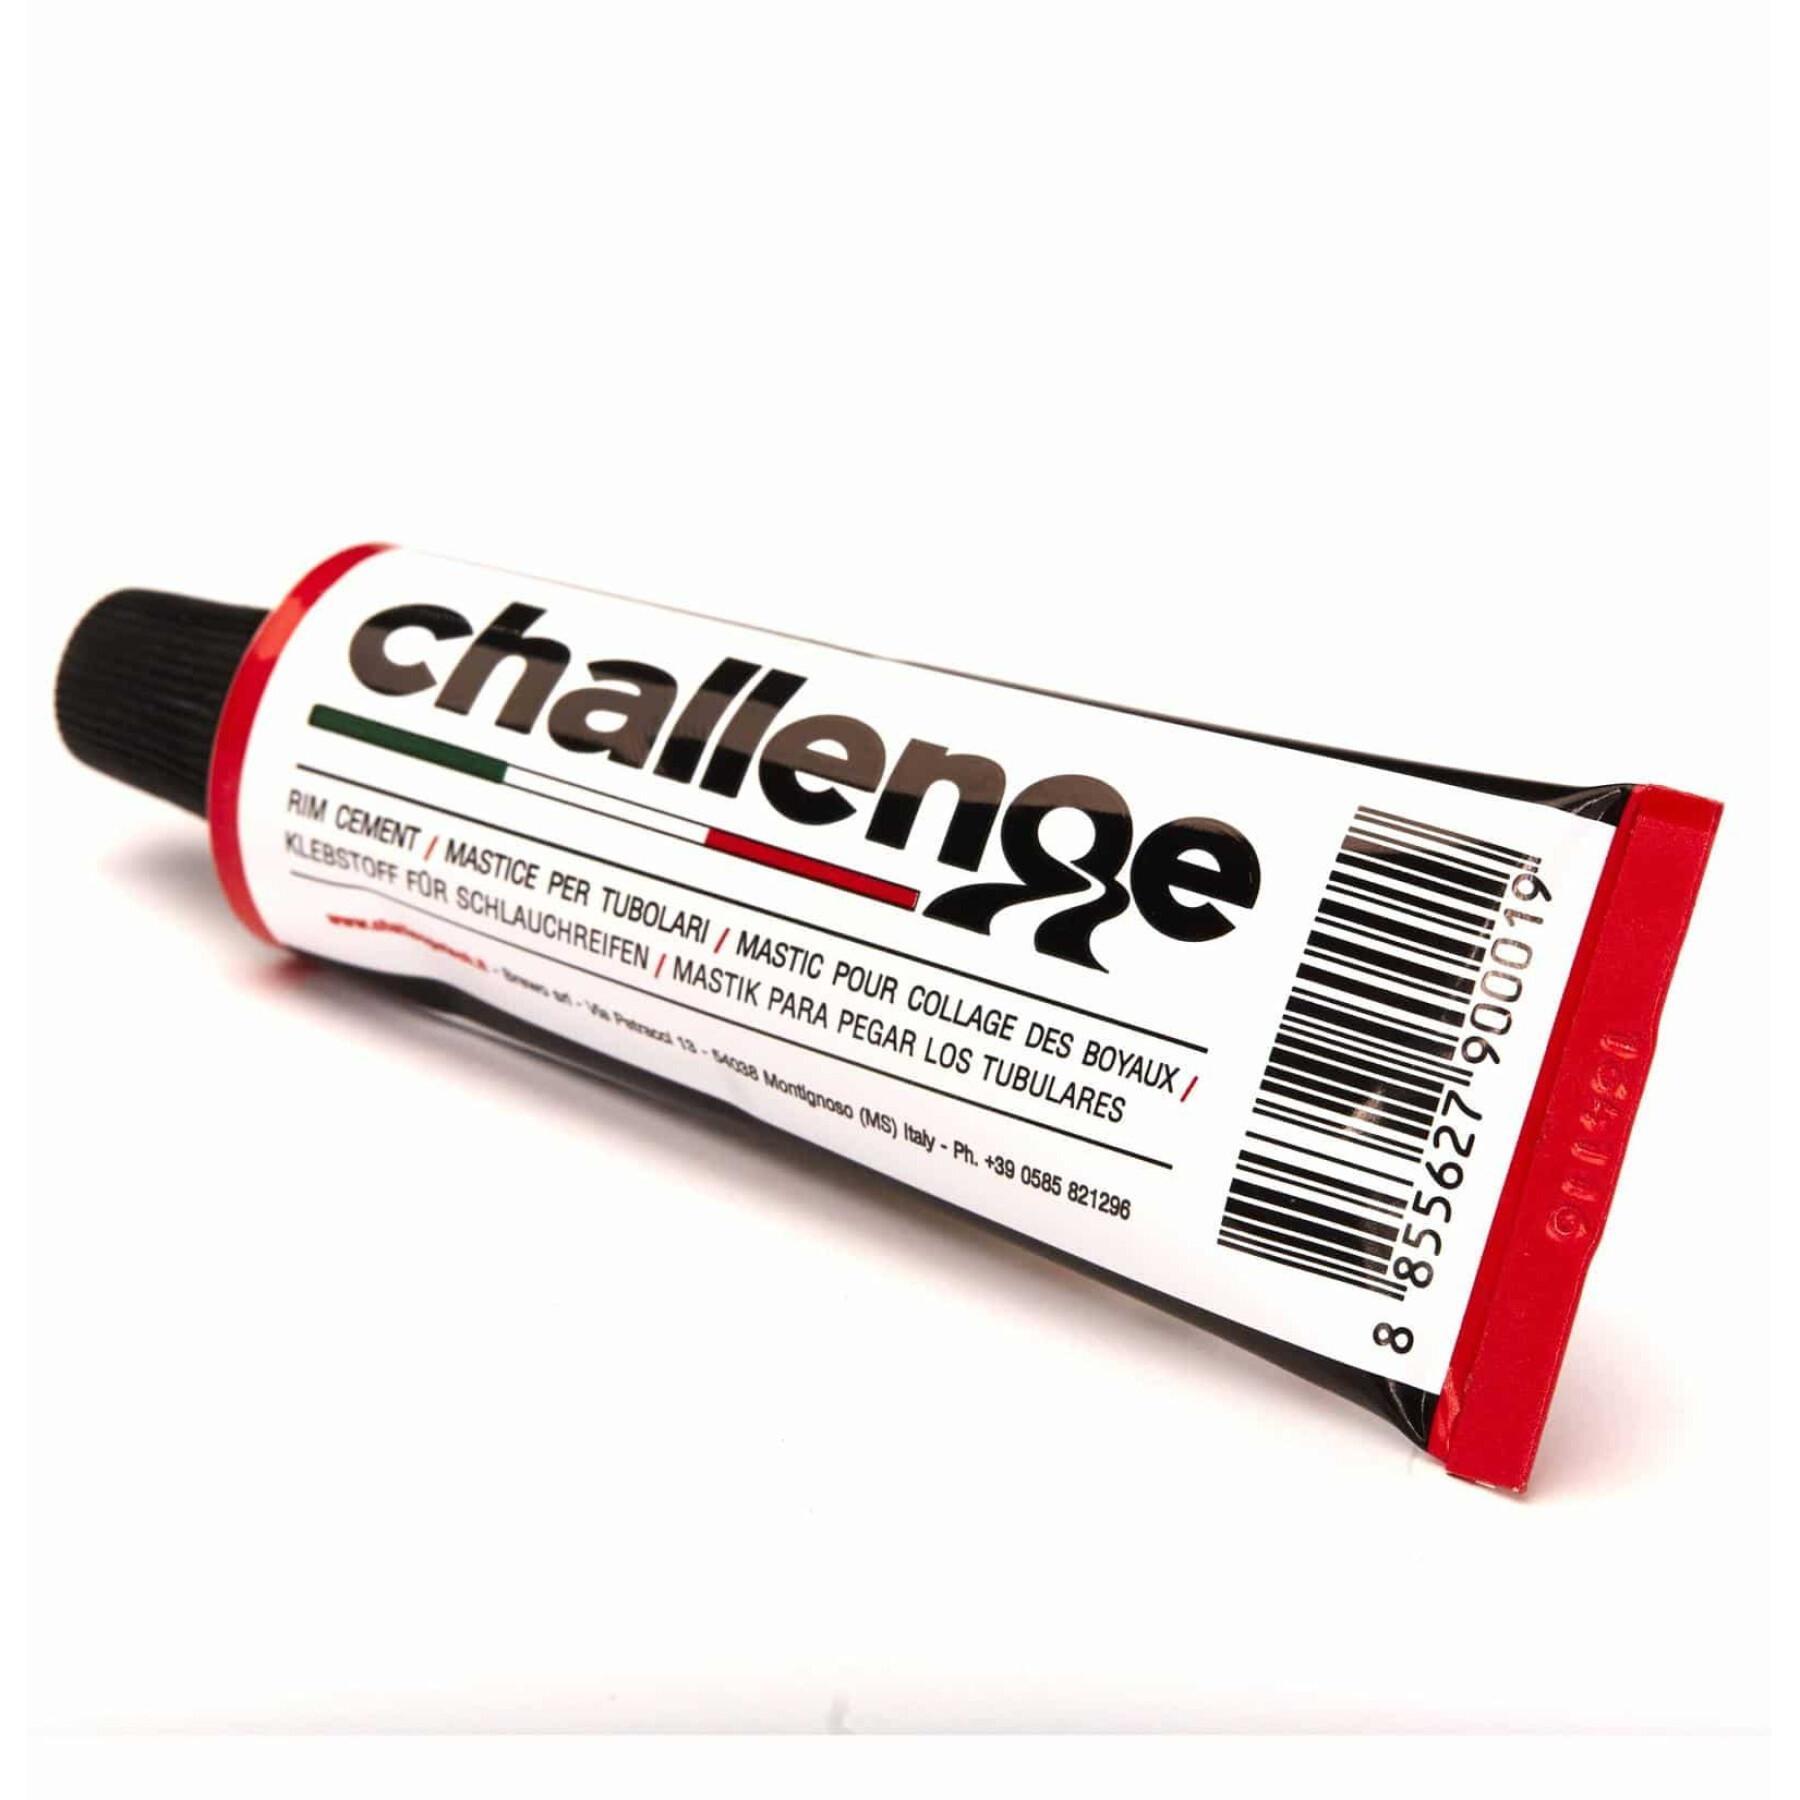 Hose glue Challenge